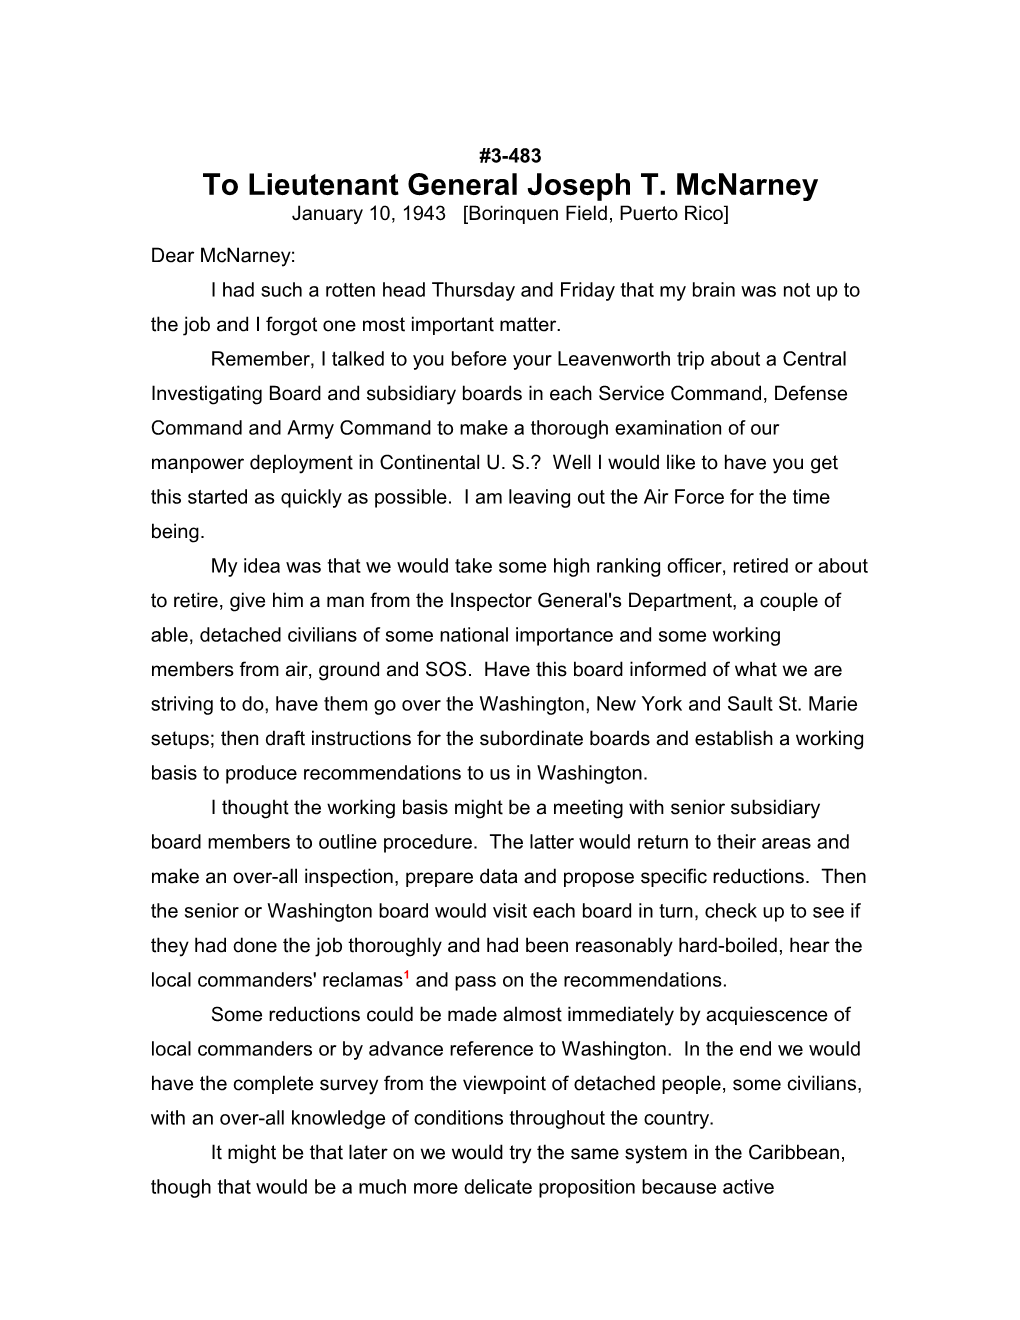 To Lieutenant General Joseph T. Mcnarney